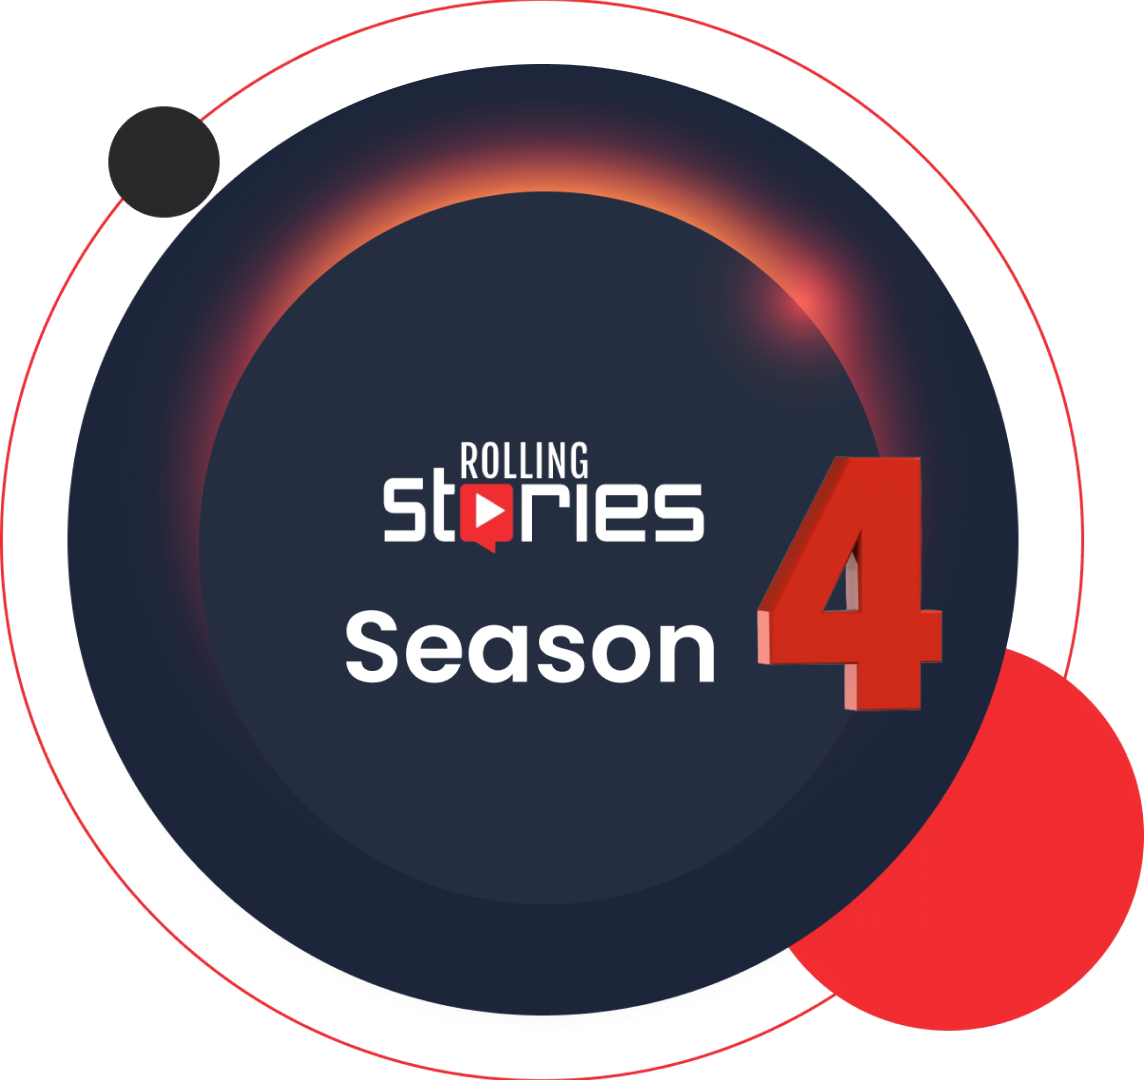 Rolling Stories Season 4